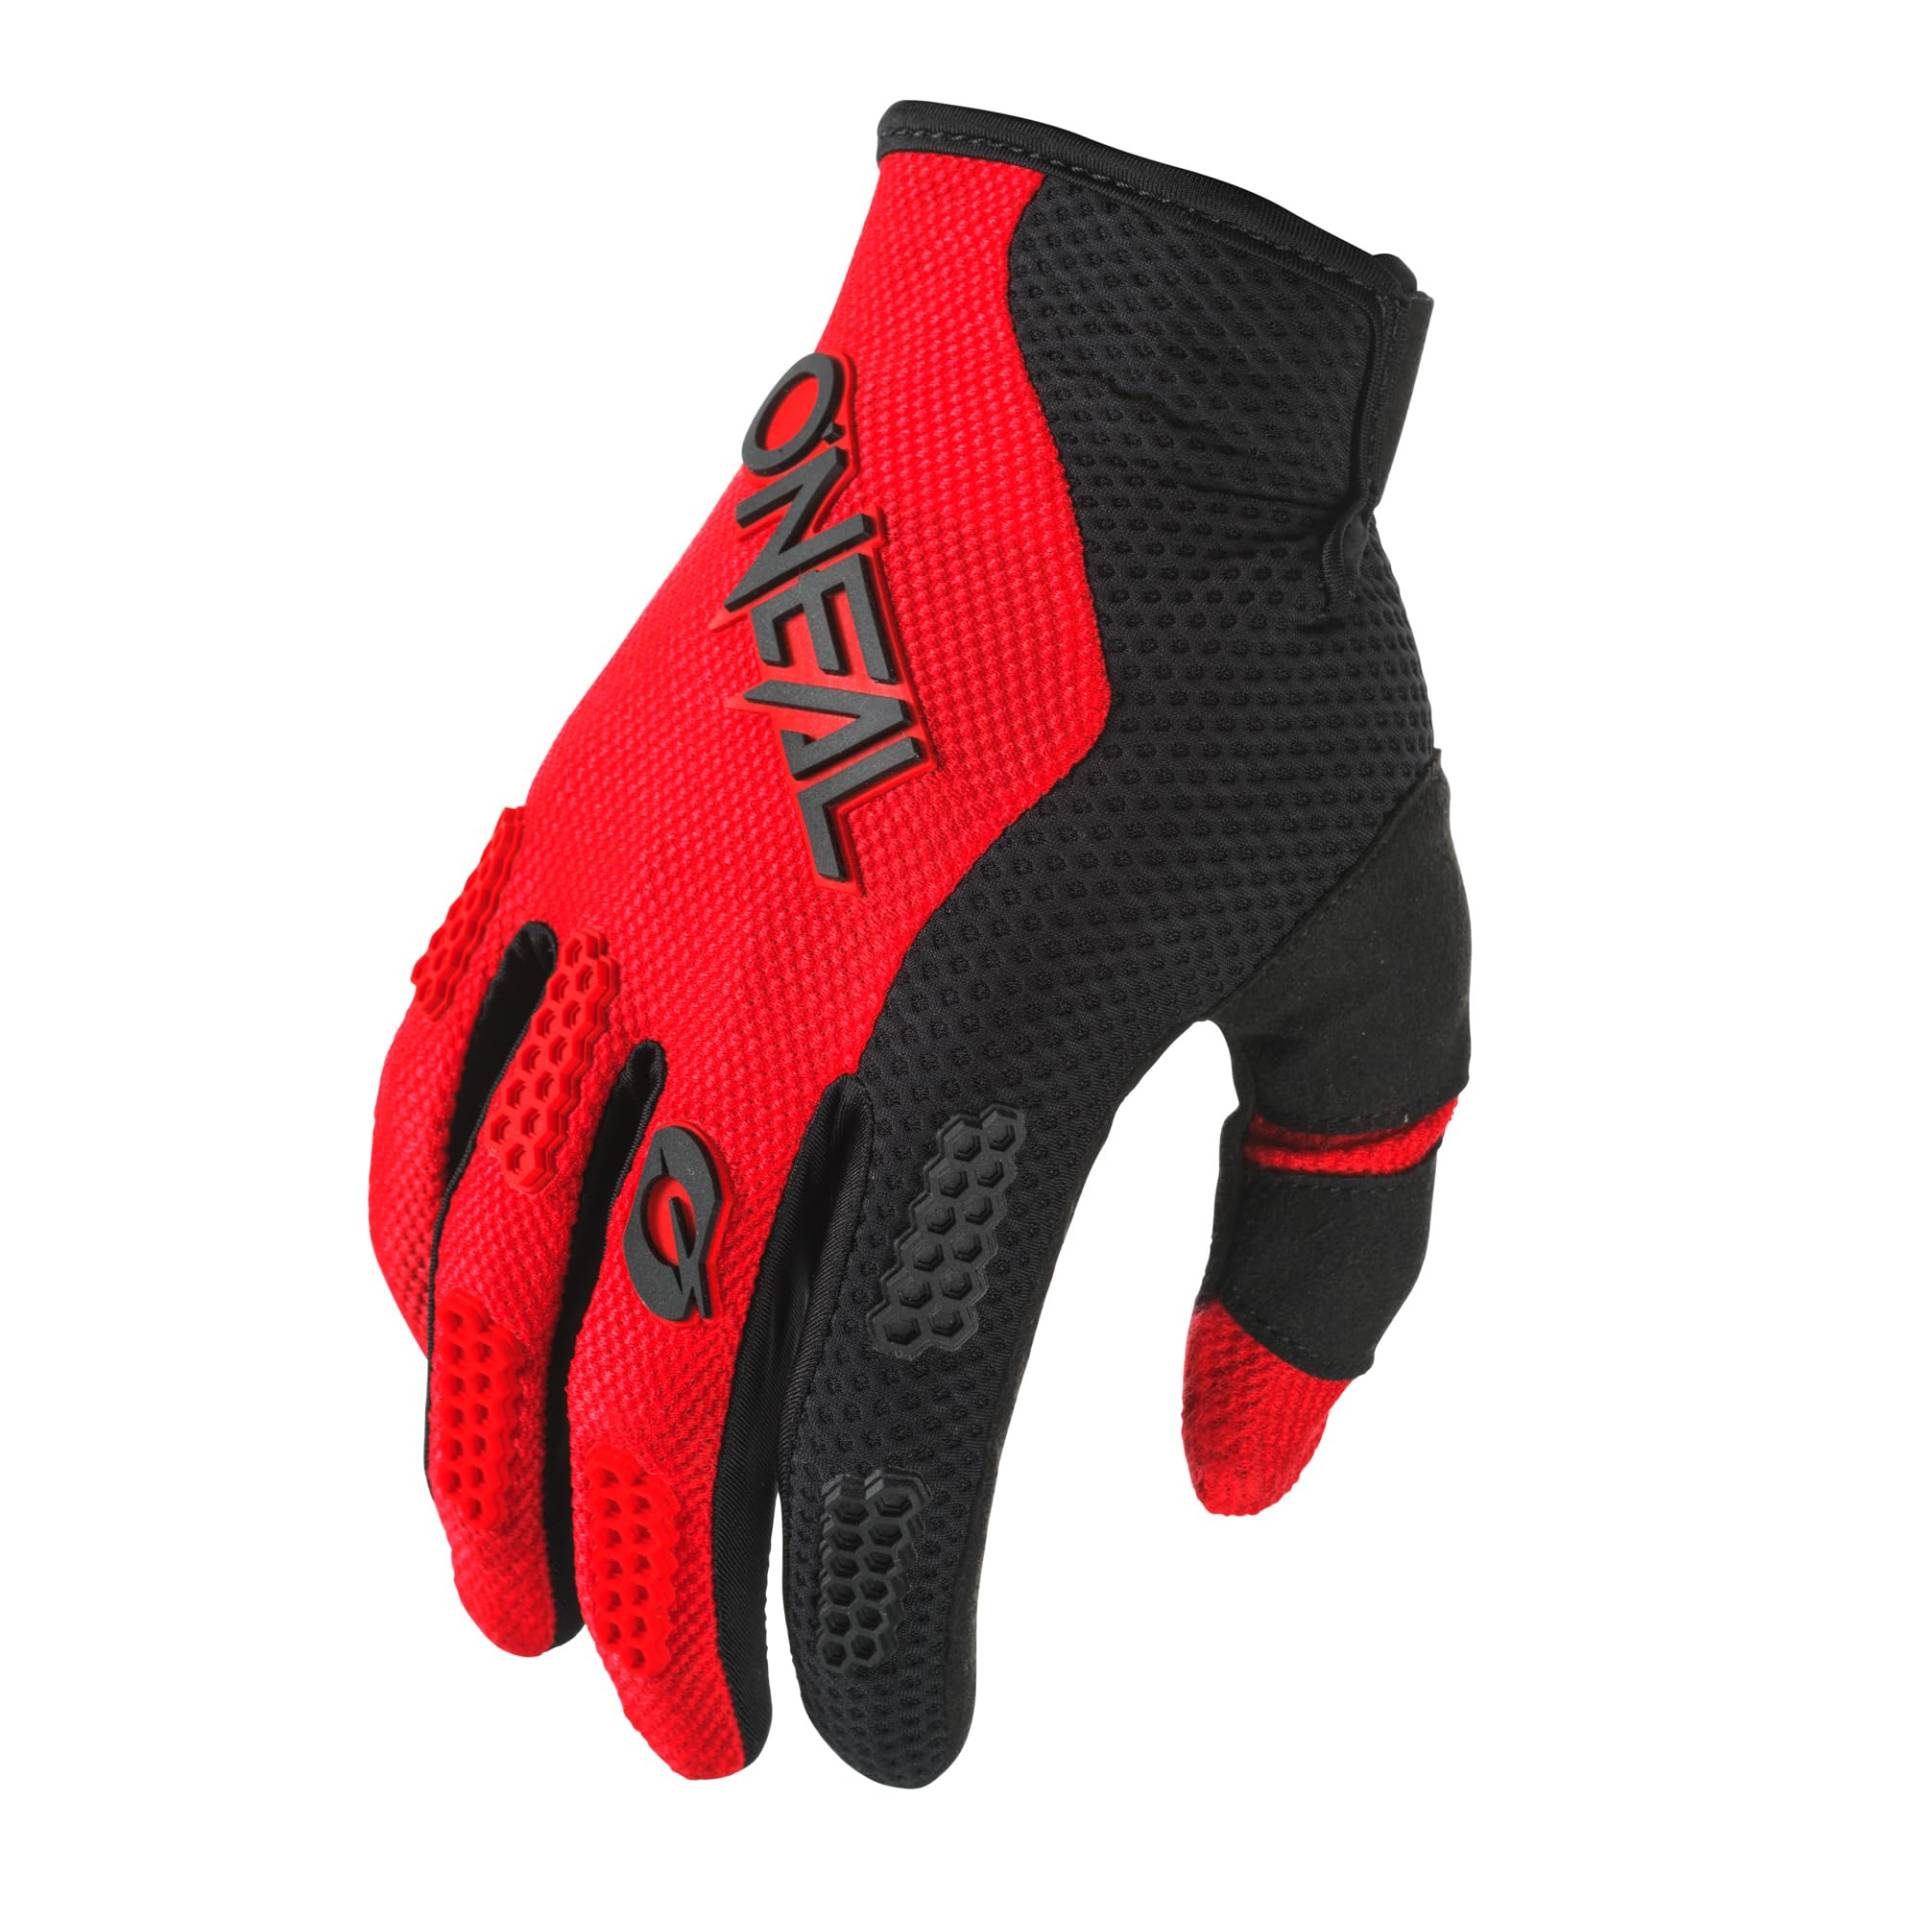 O'NEAL | Fahrrad- & Motocross-Handschuhe | MX MTB FR Downhill | Passform, Luftdurchlässiges Material | Element Youth Glove RACEWEAR V.24 | Erwachsene | Schwarz Rot | Größe L von O'NEAL